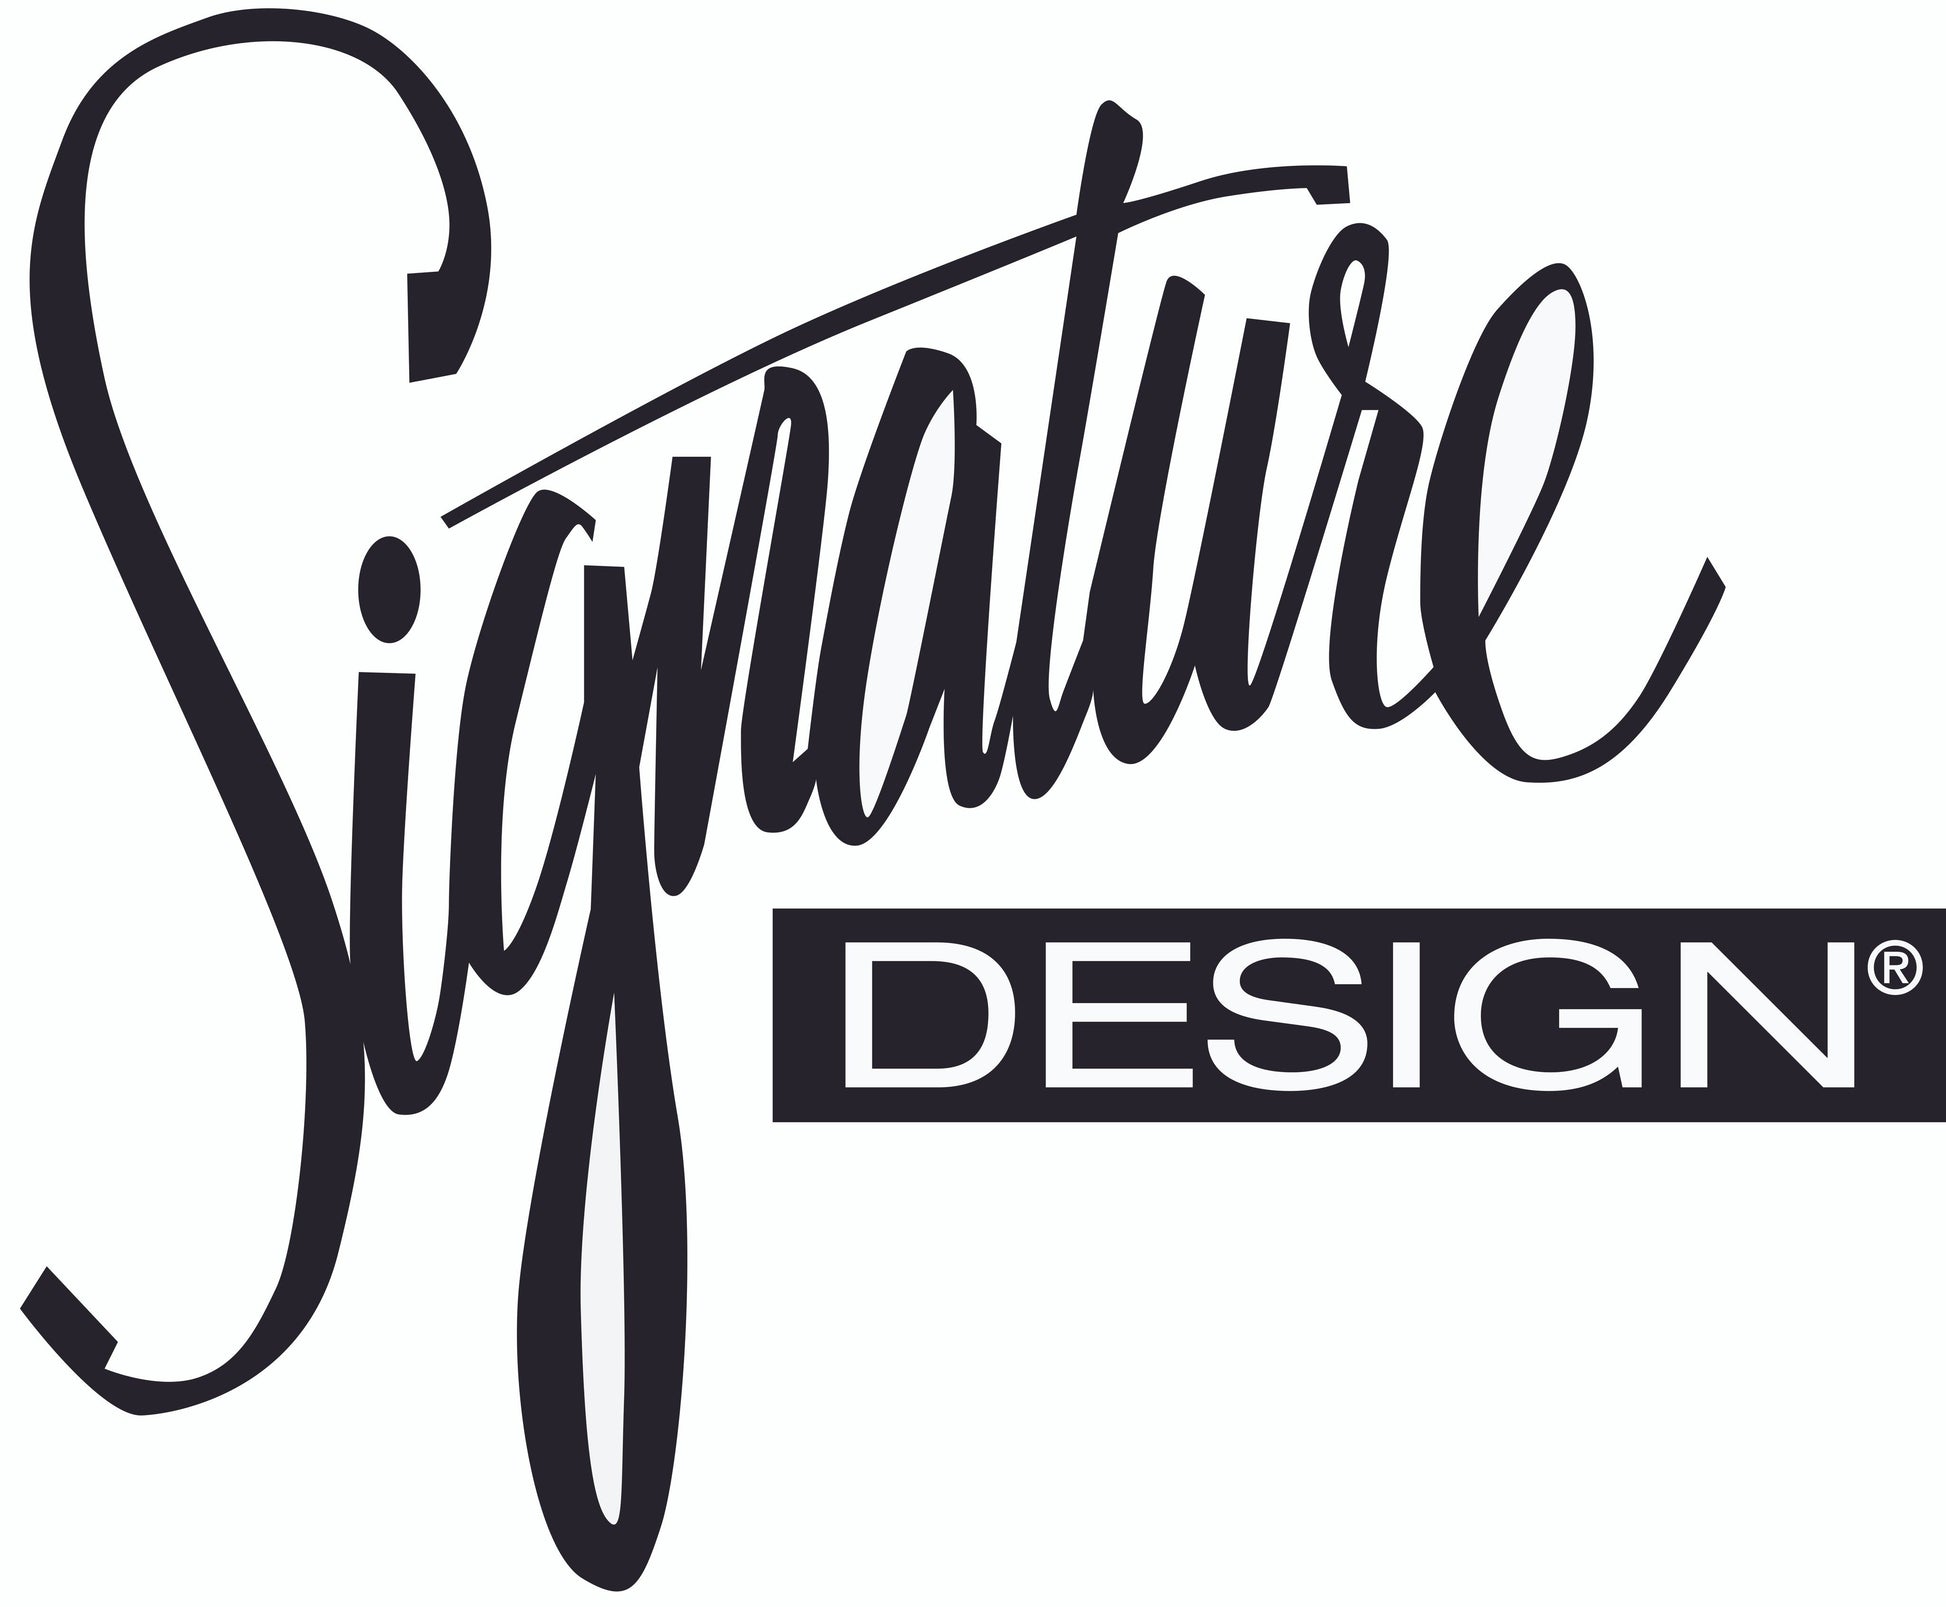 Stonemeade Queen Sofa Sleeper Signature Design by Ashley®